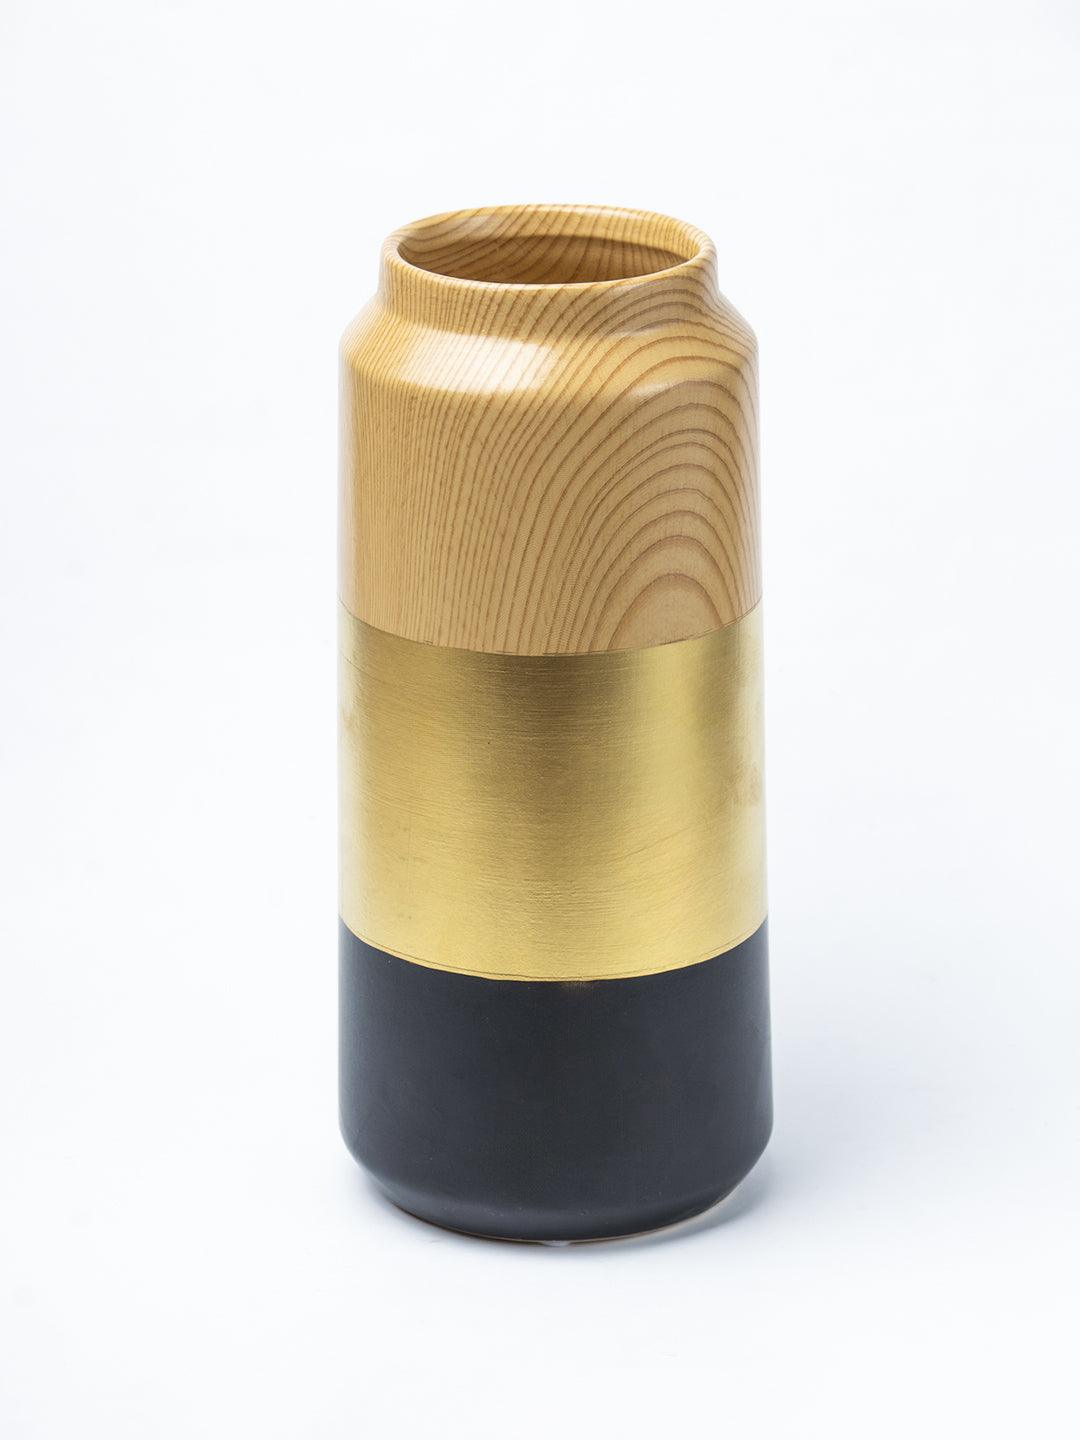 Stylish Ceramic Vase - Wooden, White & Golden, Contemporary Design - 3